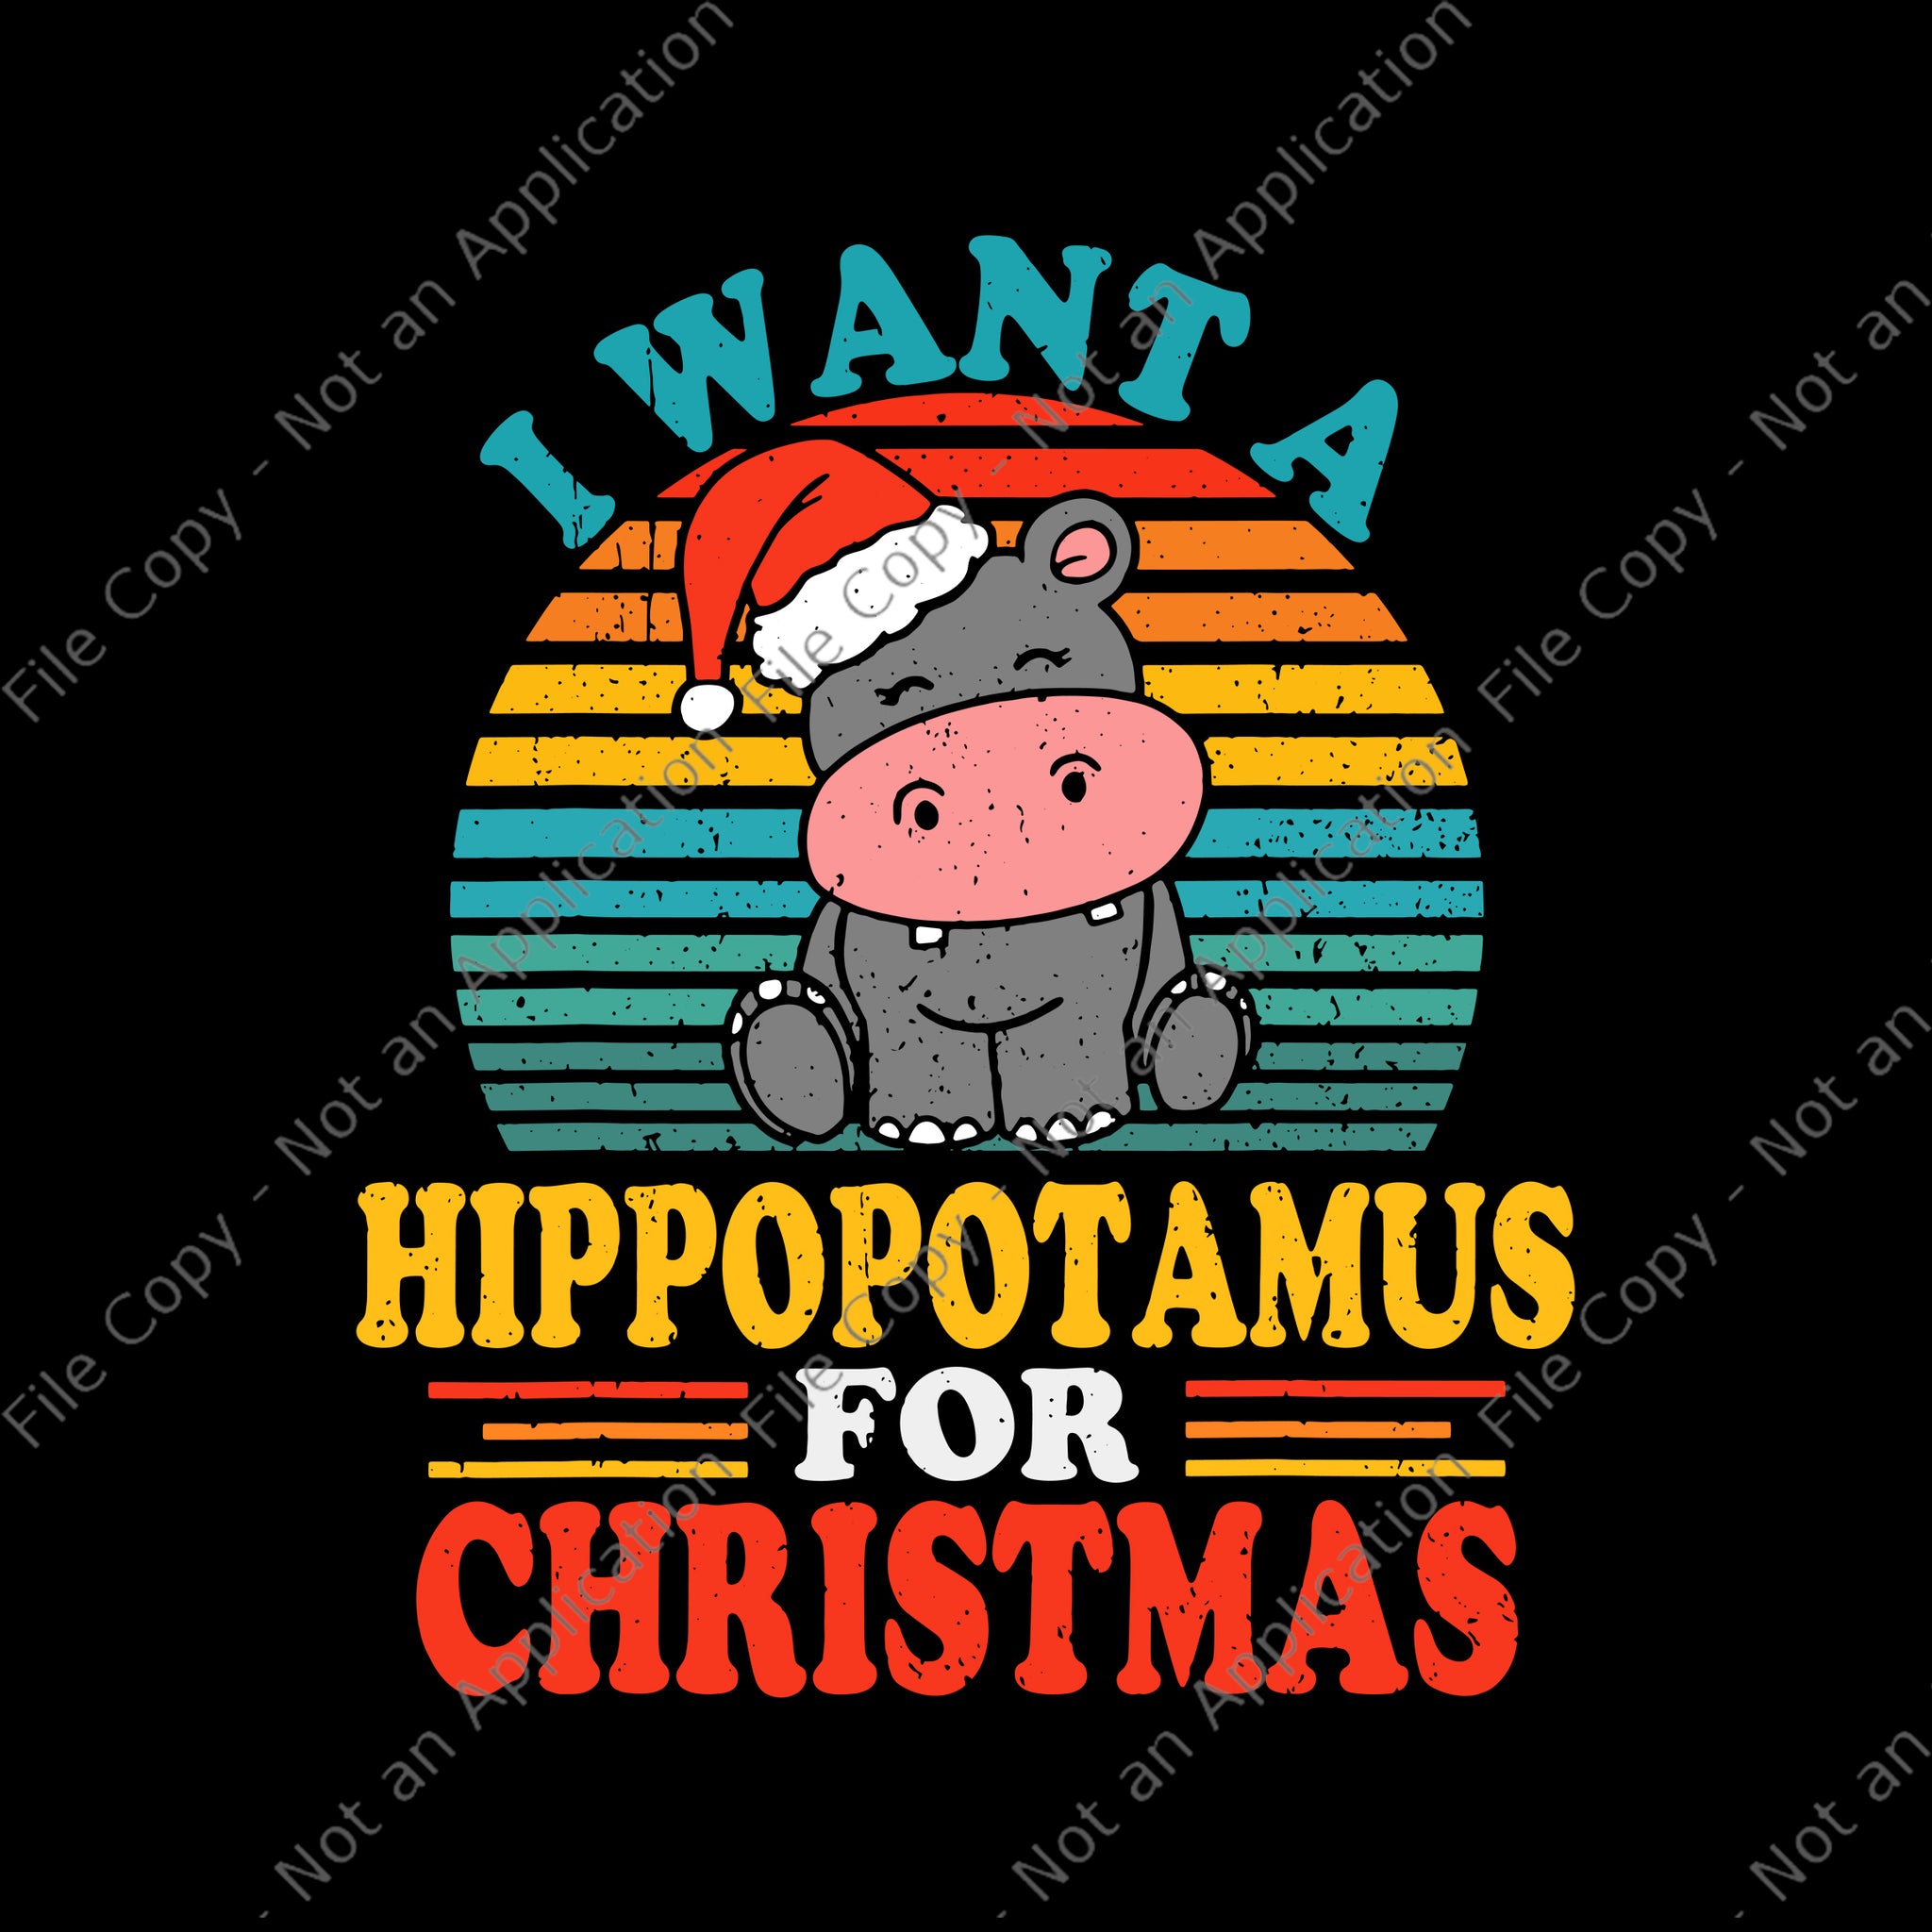 I Want A Hippopotamus For Christmas Svg, Funny Hippo Pajamas Xmas Svg, Hippopotamus Christmas Svg, Christmas Svg, Hippopotamus Svg